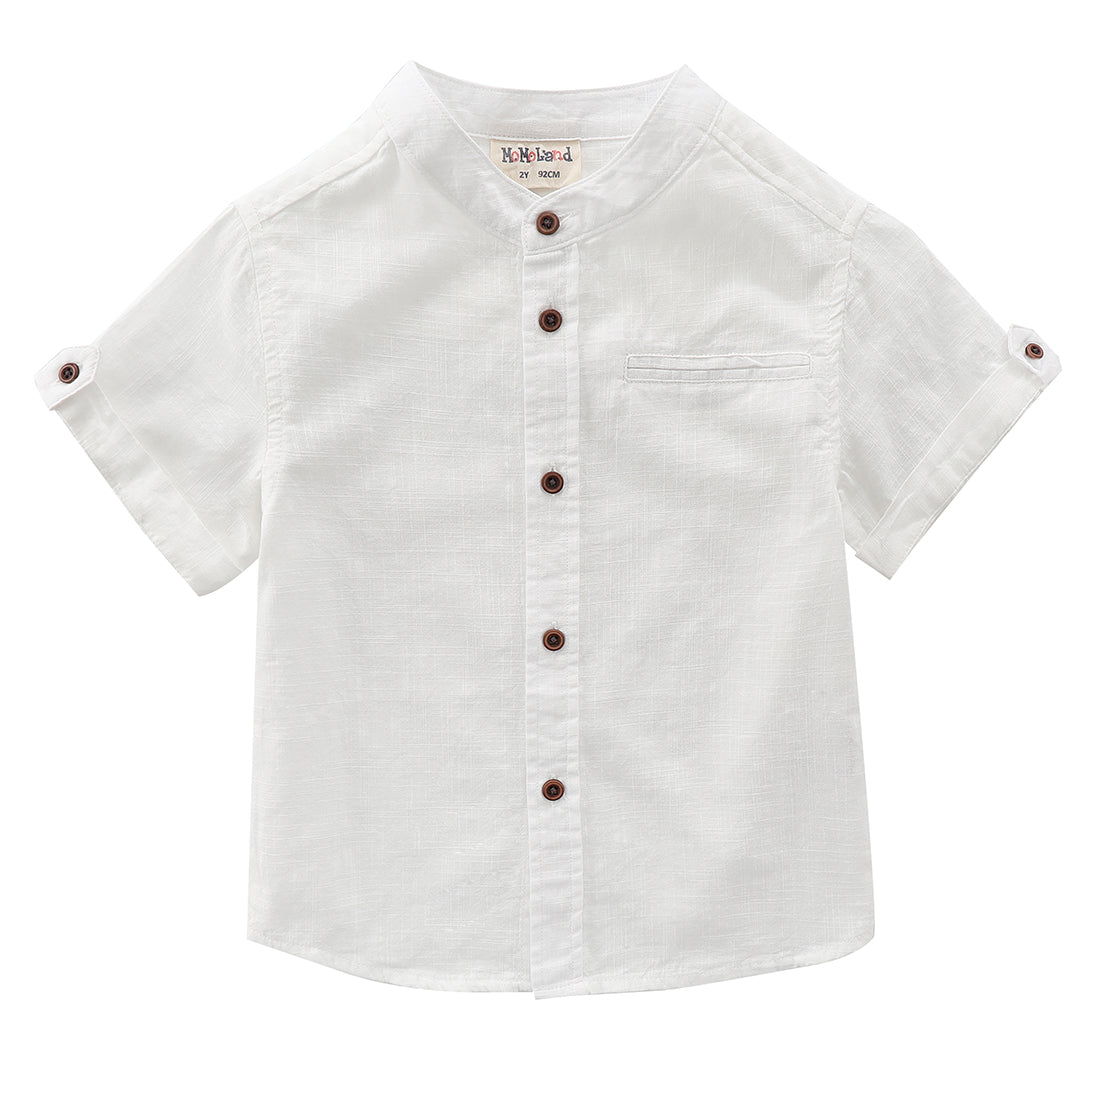 Boy Mandarin collar Short Sleeve off white fake linen shirt front